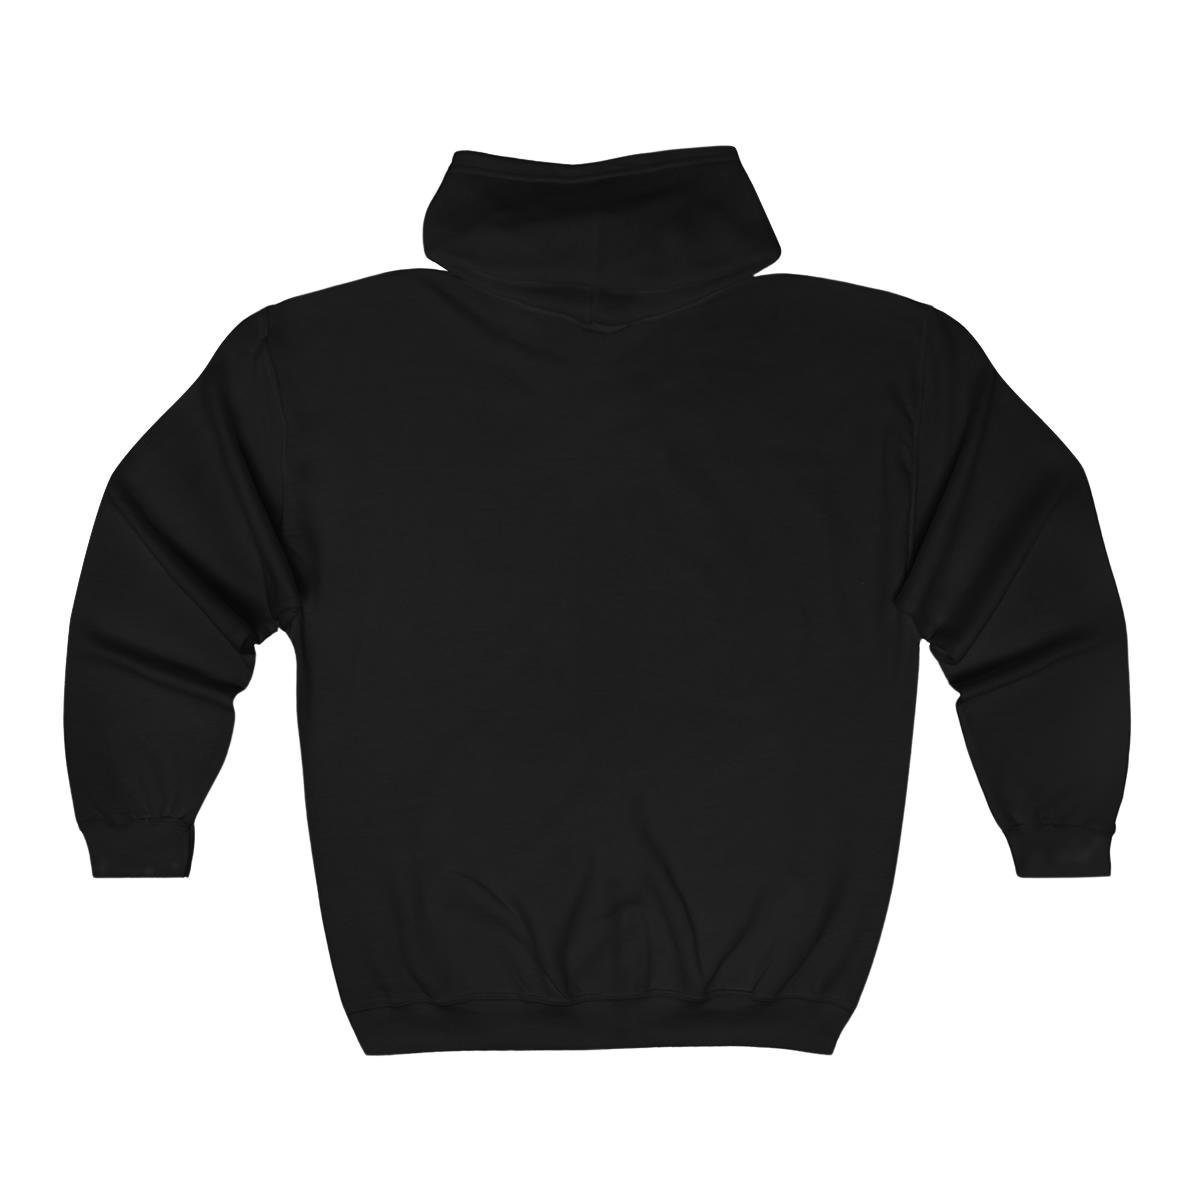 Mawcore Gear Full Zip Hooded Sweatshirt